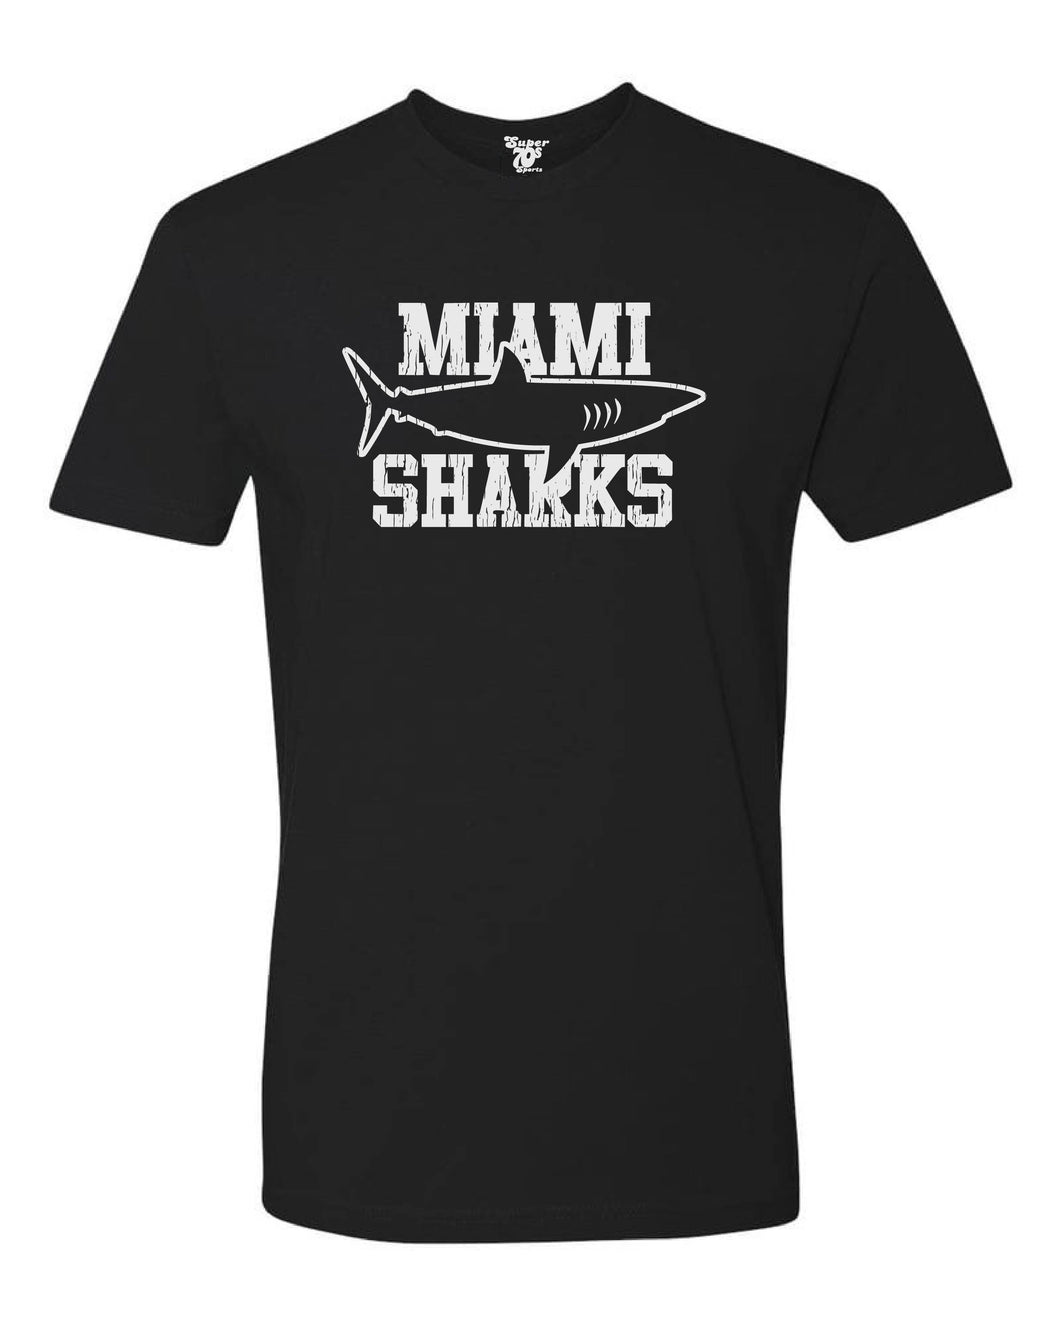 Miami Sharks Tee